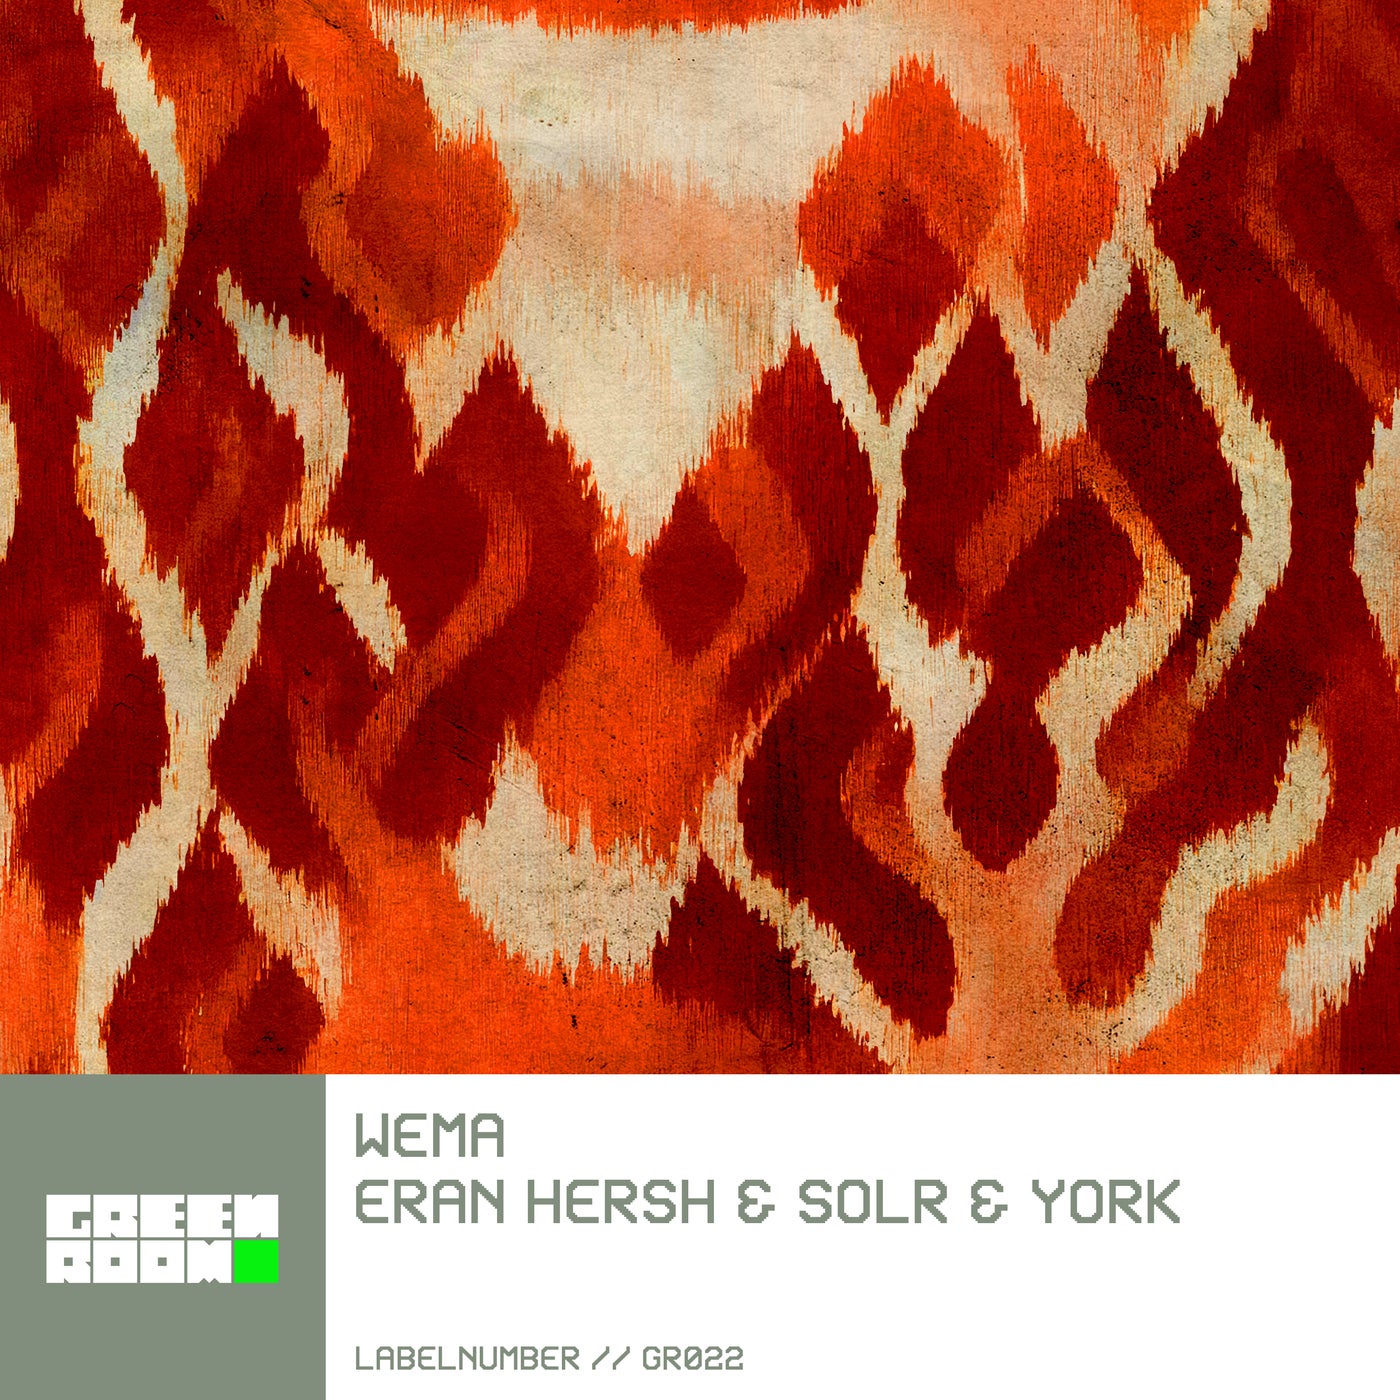 image cover: York, Eran Hersh, Solr - Wema (Extended Mix) on Green Room